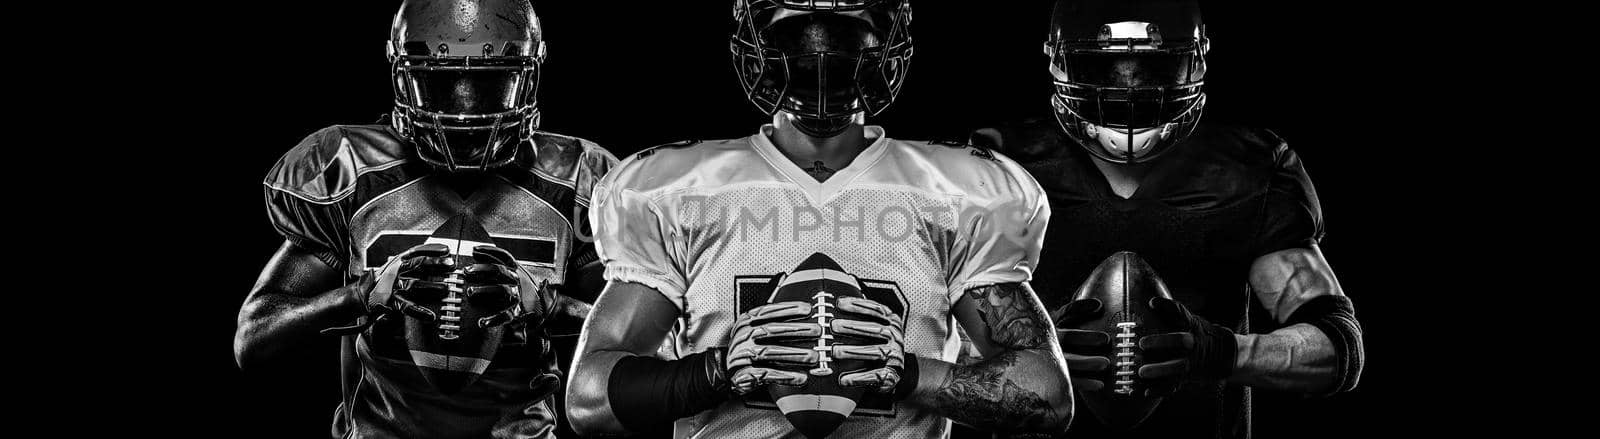 American football player, sportsman in helmet on dark background. Black and white photo. Sport wallpaper. by MikeOrlov